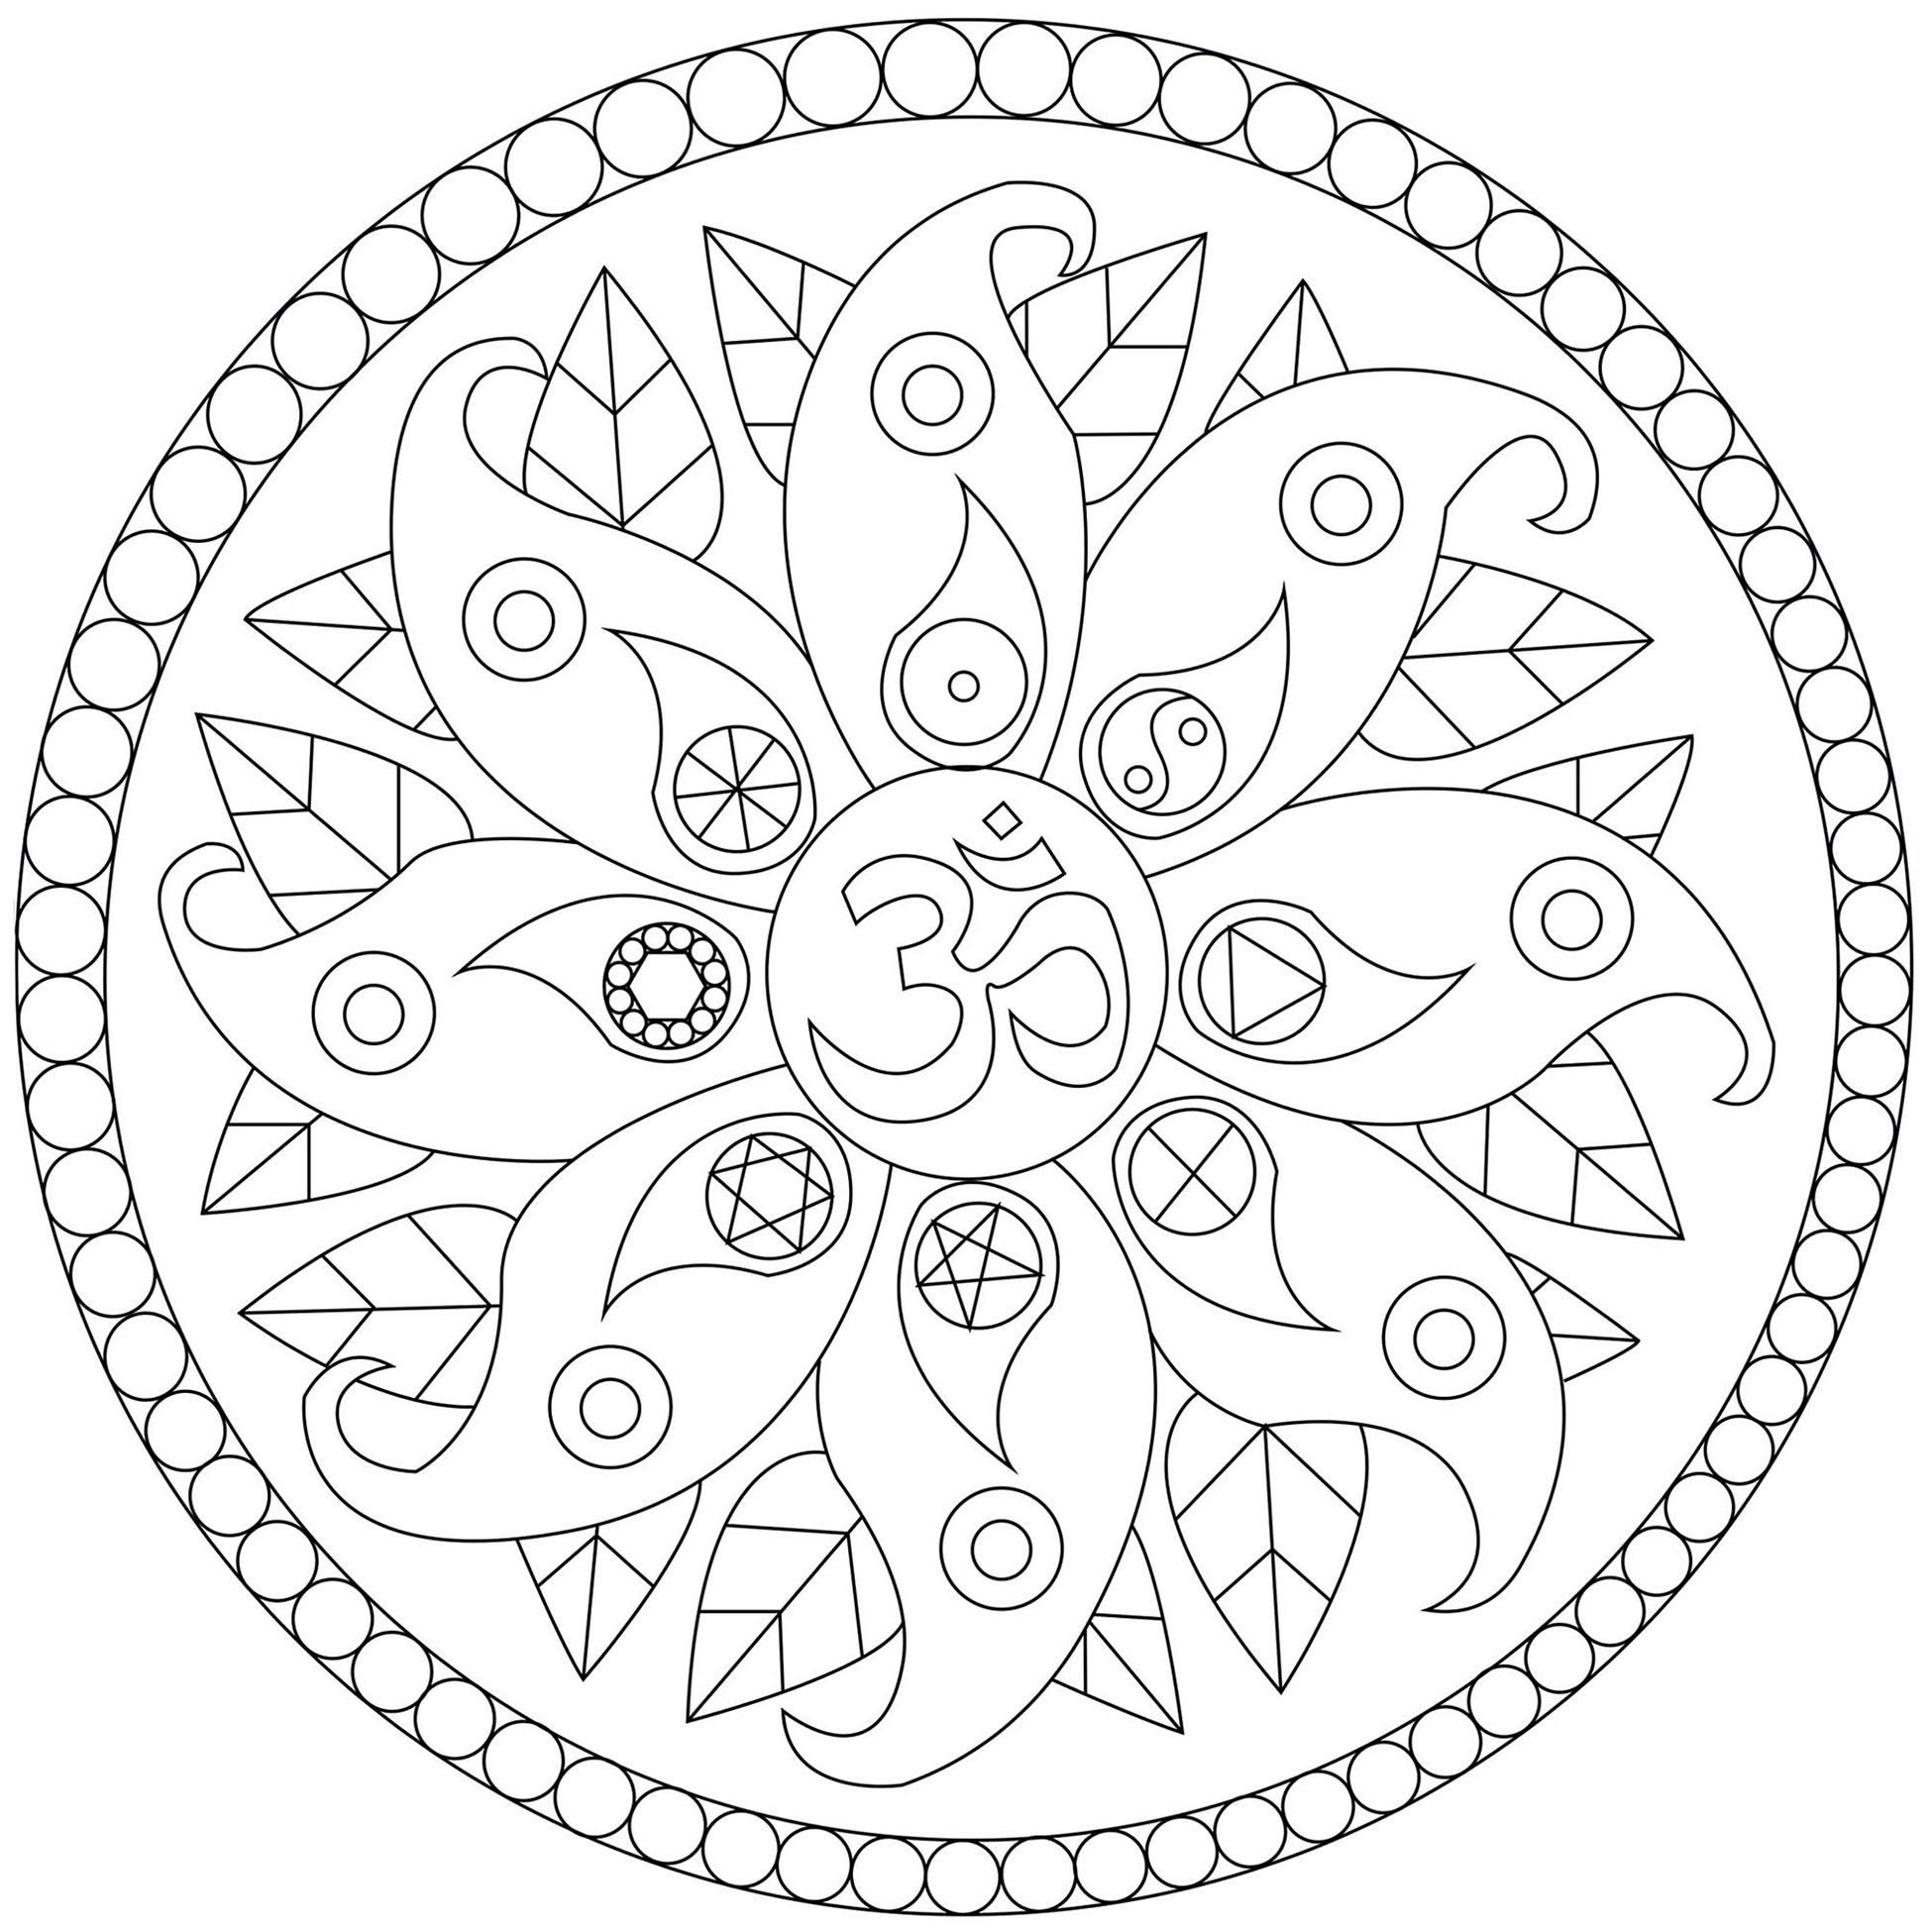 Download Simple Mandala With Symbols Easy Mandalas For Kids 100 Coloring Home